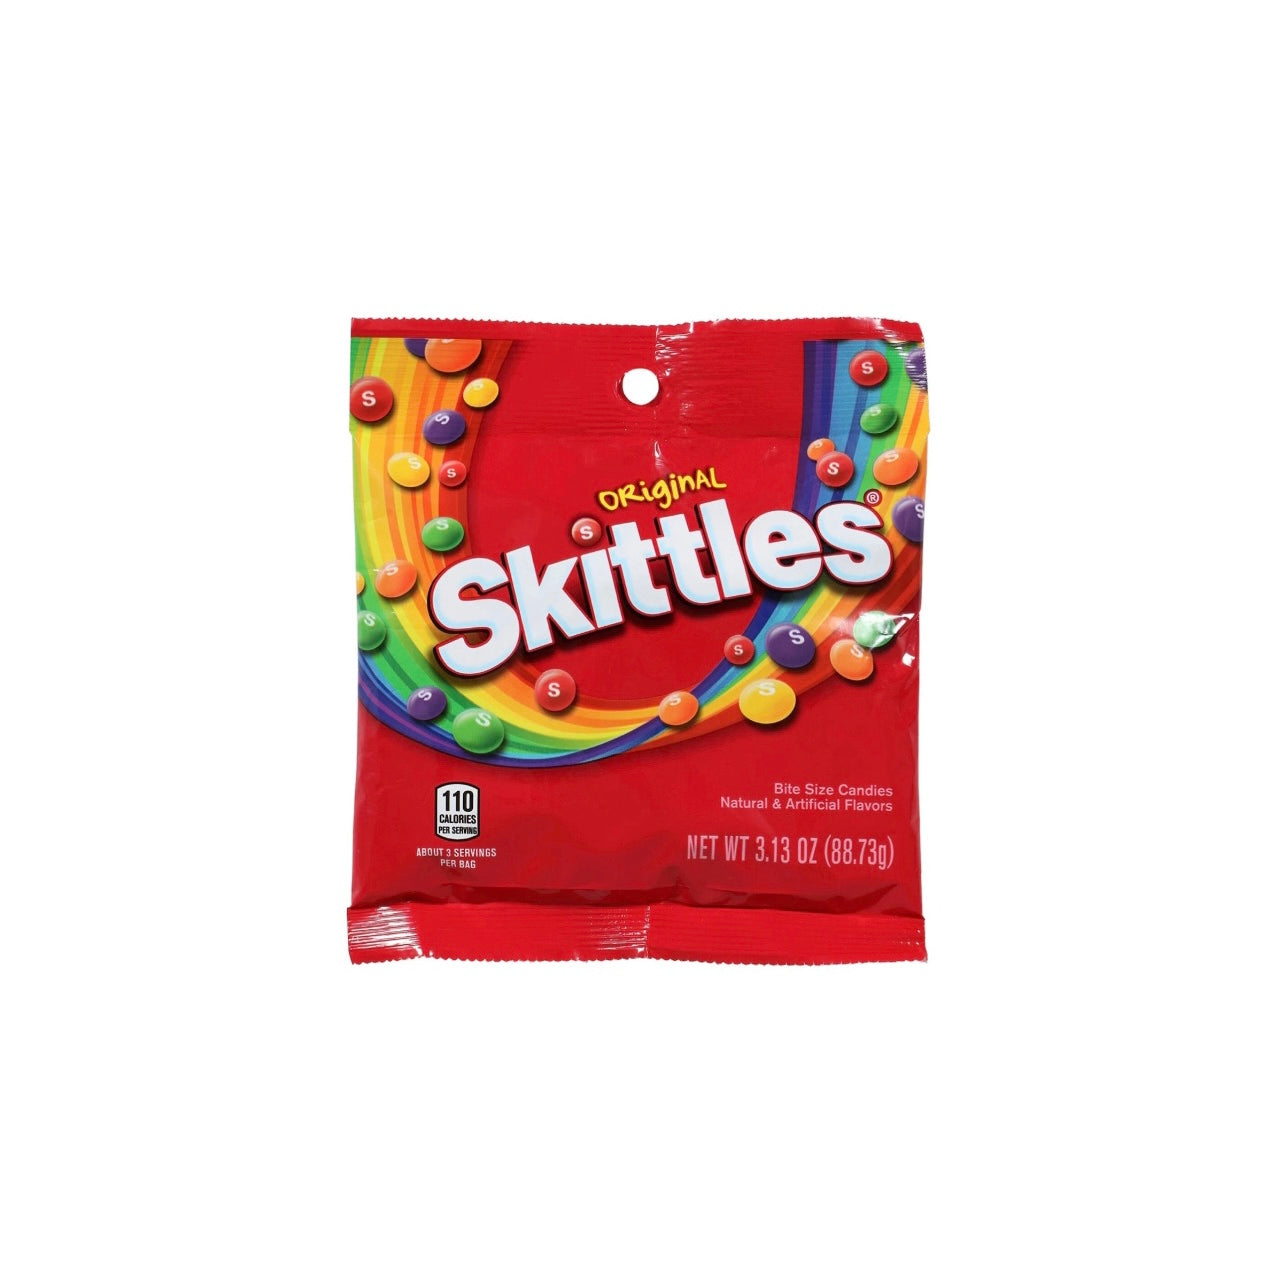 Skittles Original 3.13 oz (335547)